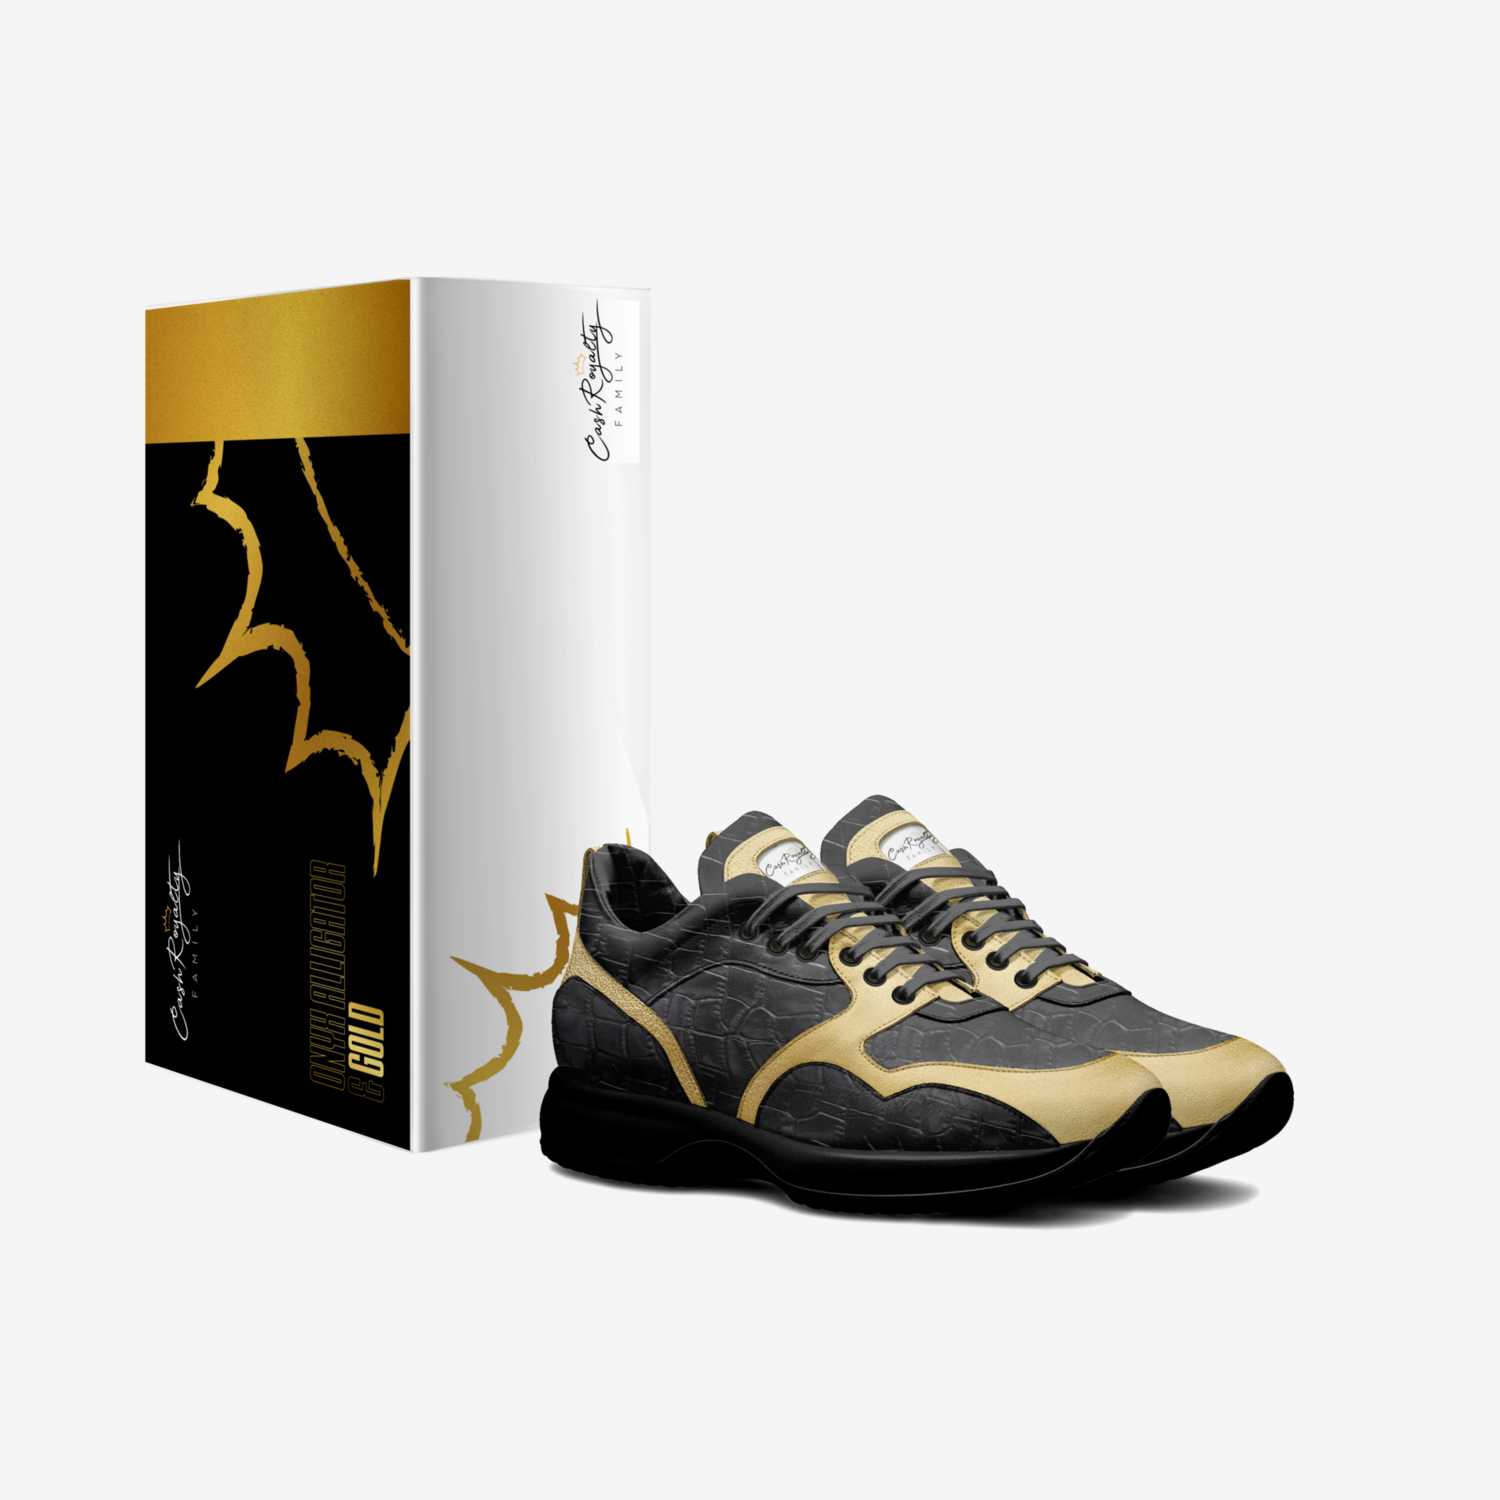 CashRoyaltyFamily custom made in Italy shoes by Kedar Nemley | Box view